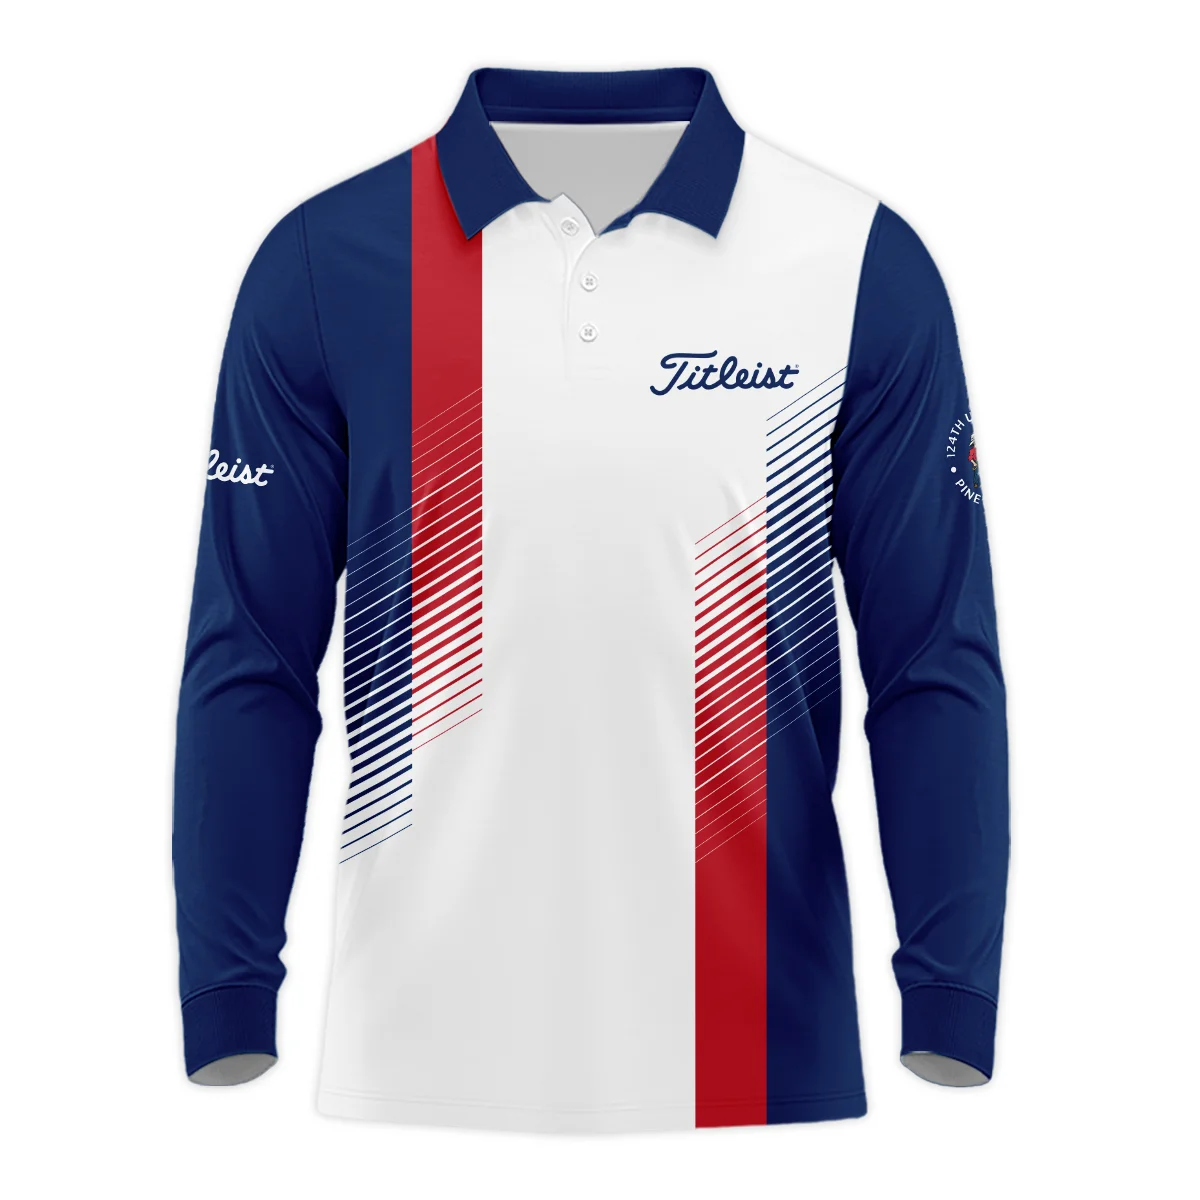 Sport Titleist 124th U.S. Open Pinehurst Golf Unisex Sweatshirt Blue Red Striped Pattern White All Over Print Sweatshirt